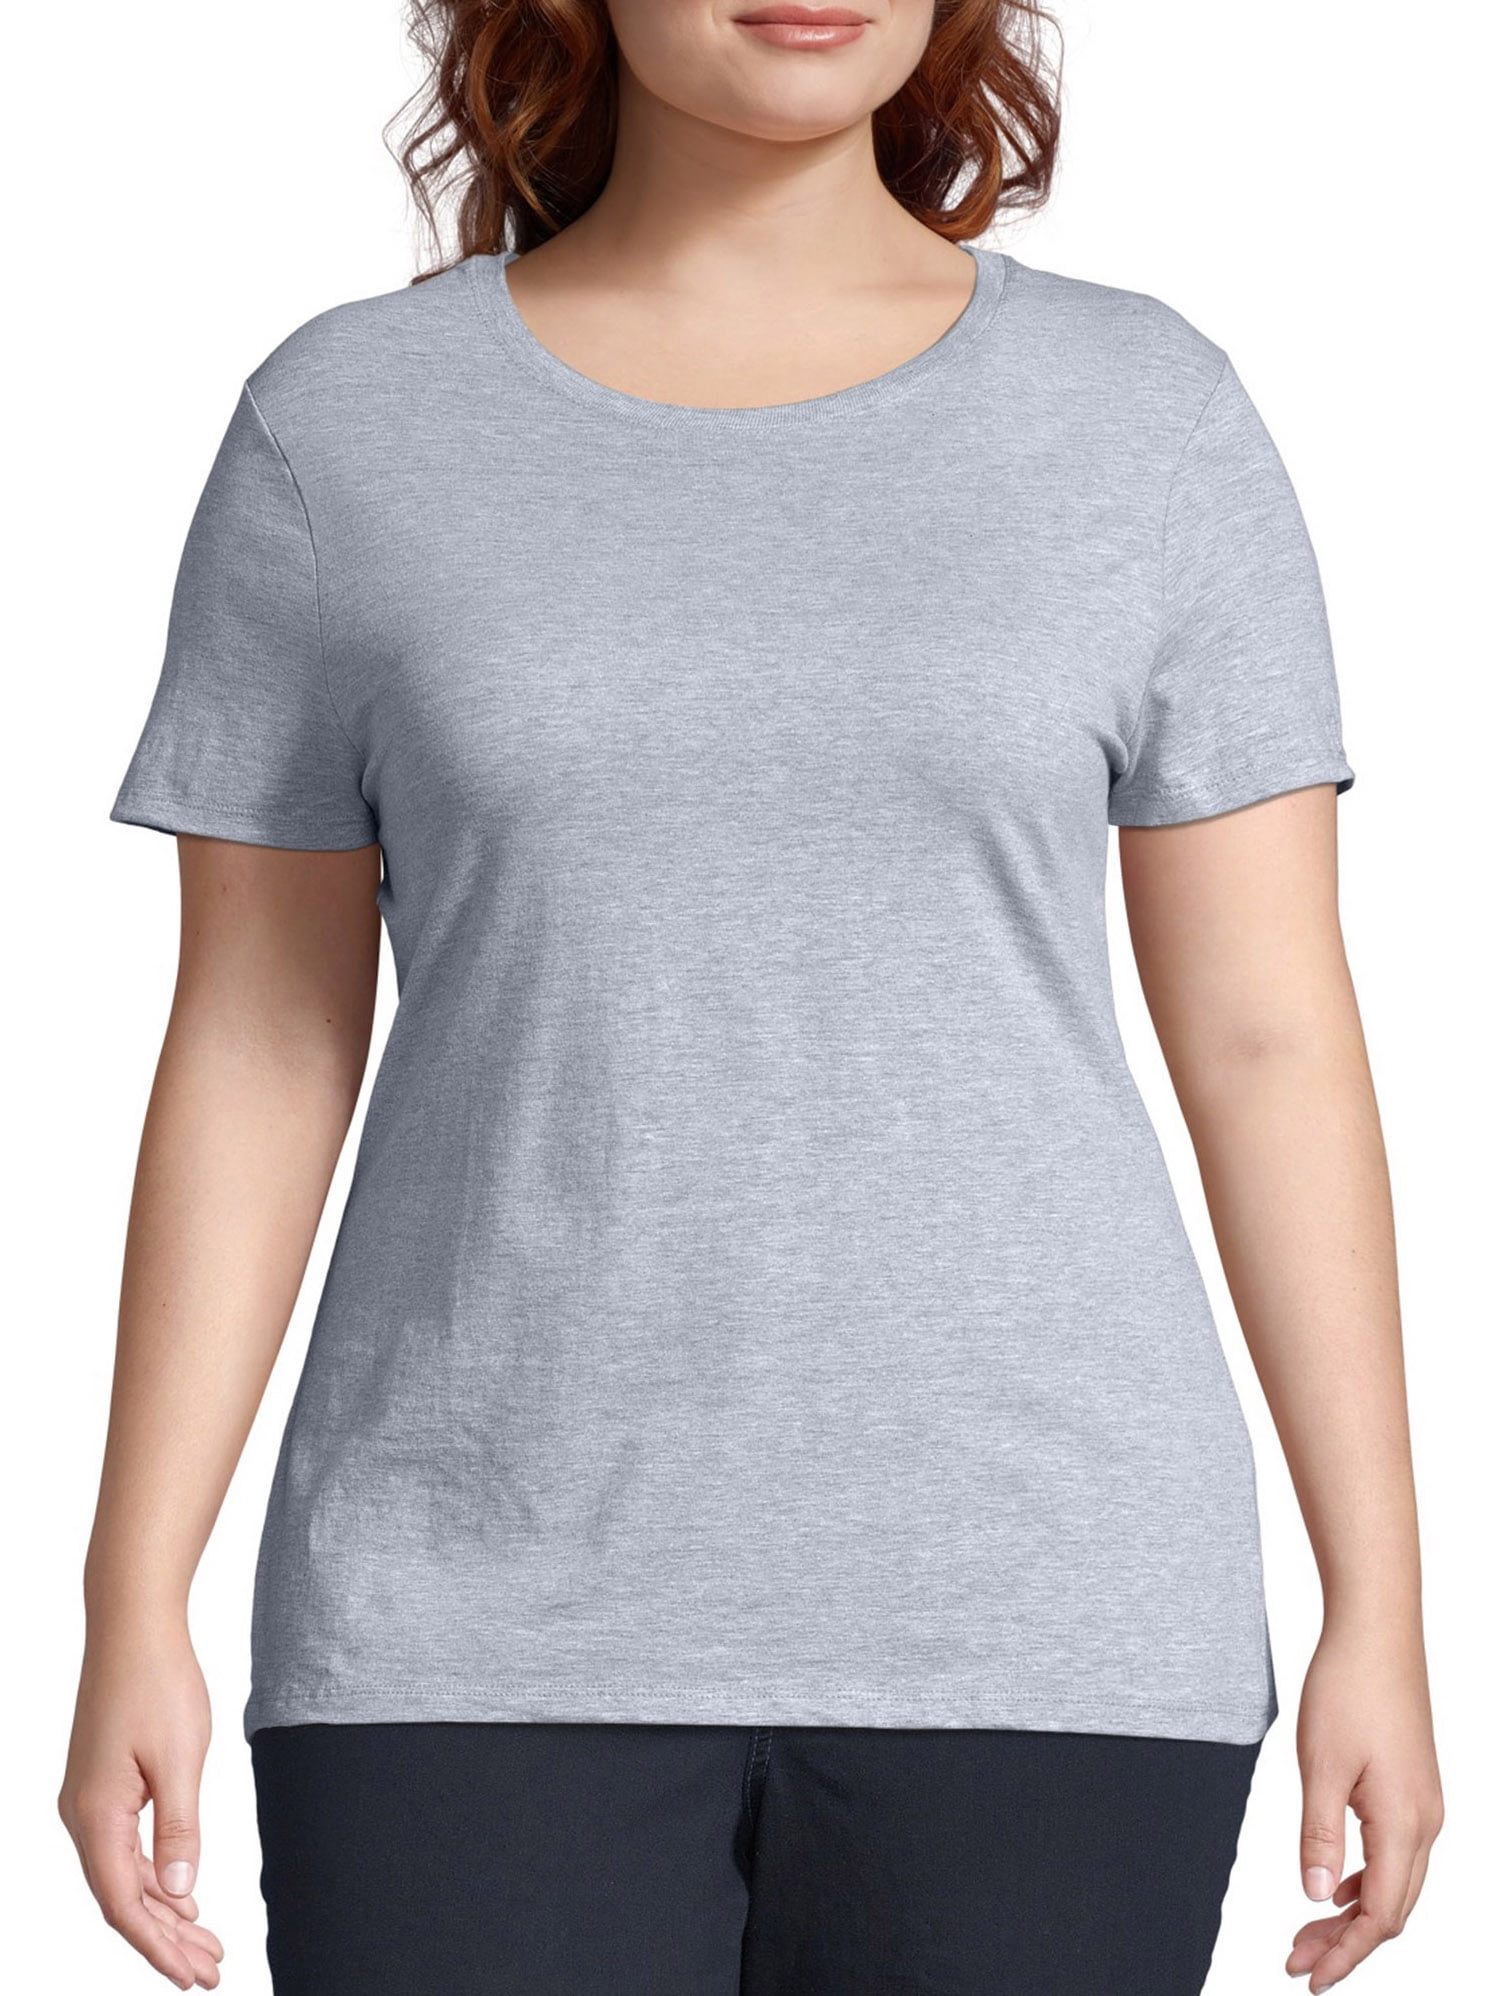 JMS by Hanes Women's Plus Size Short Sleeve Tee - Walmart.com